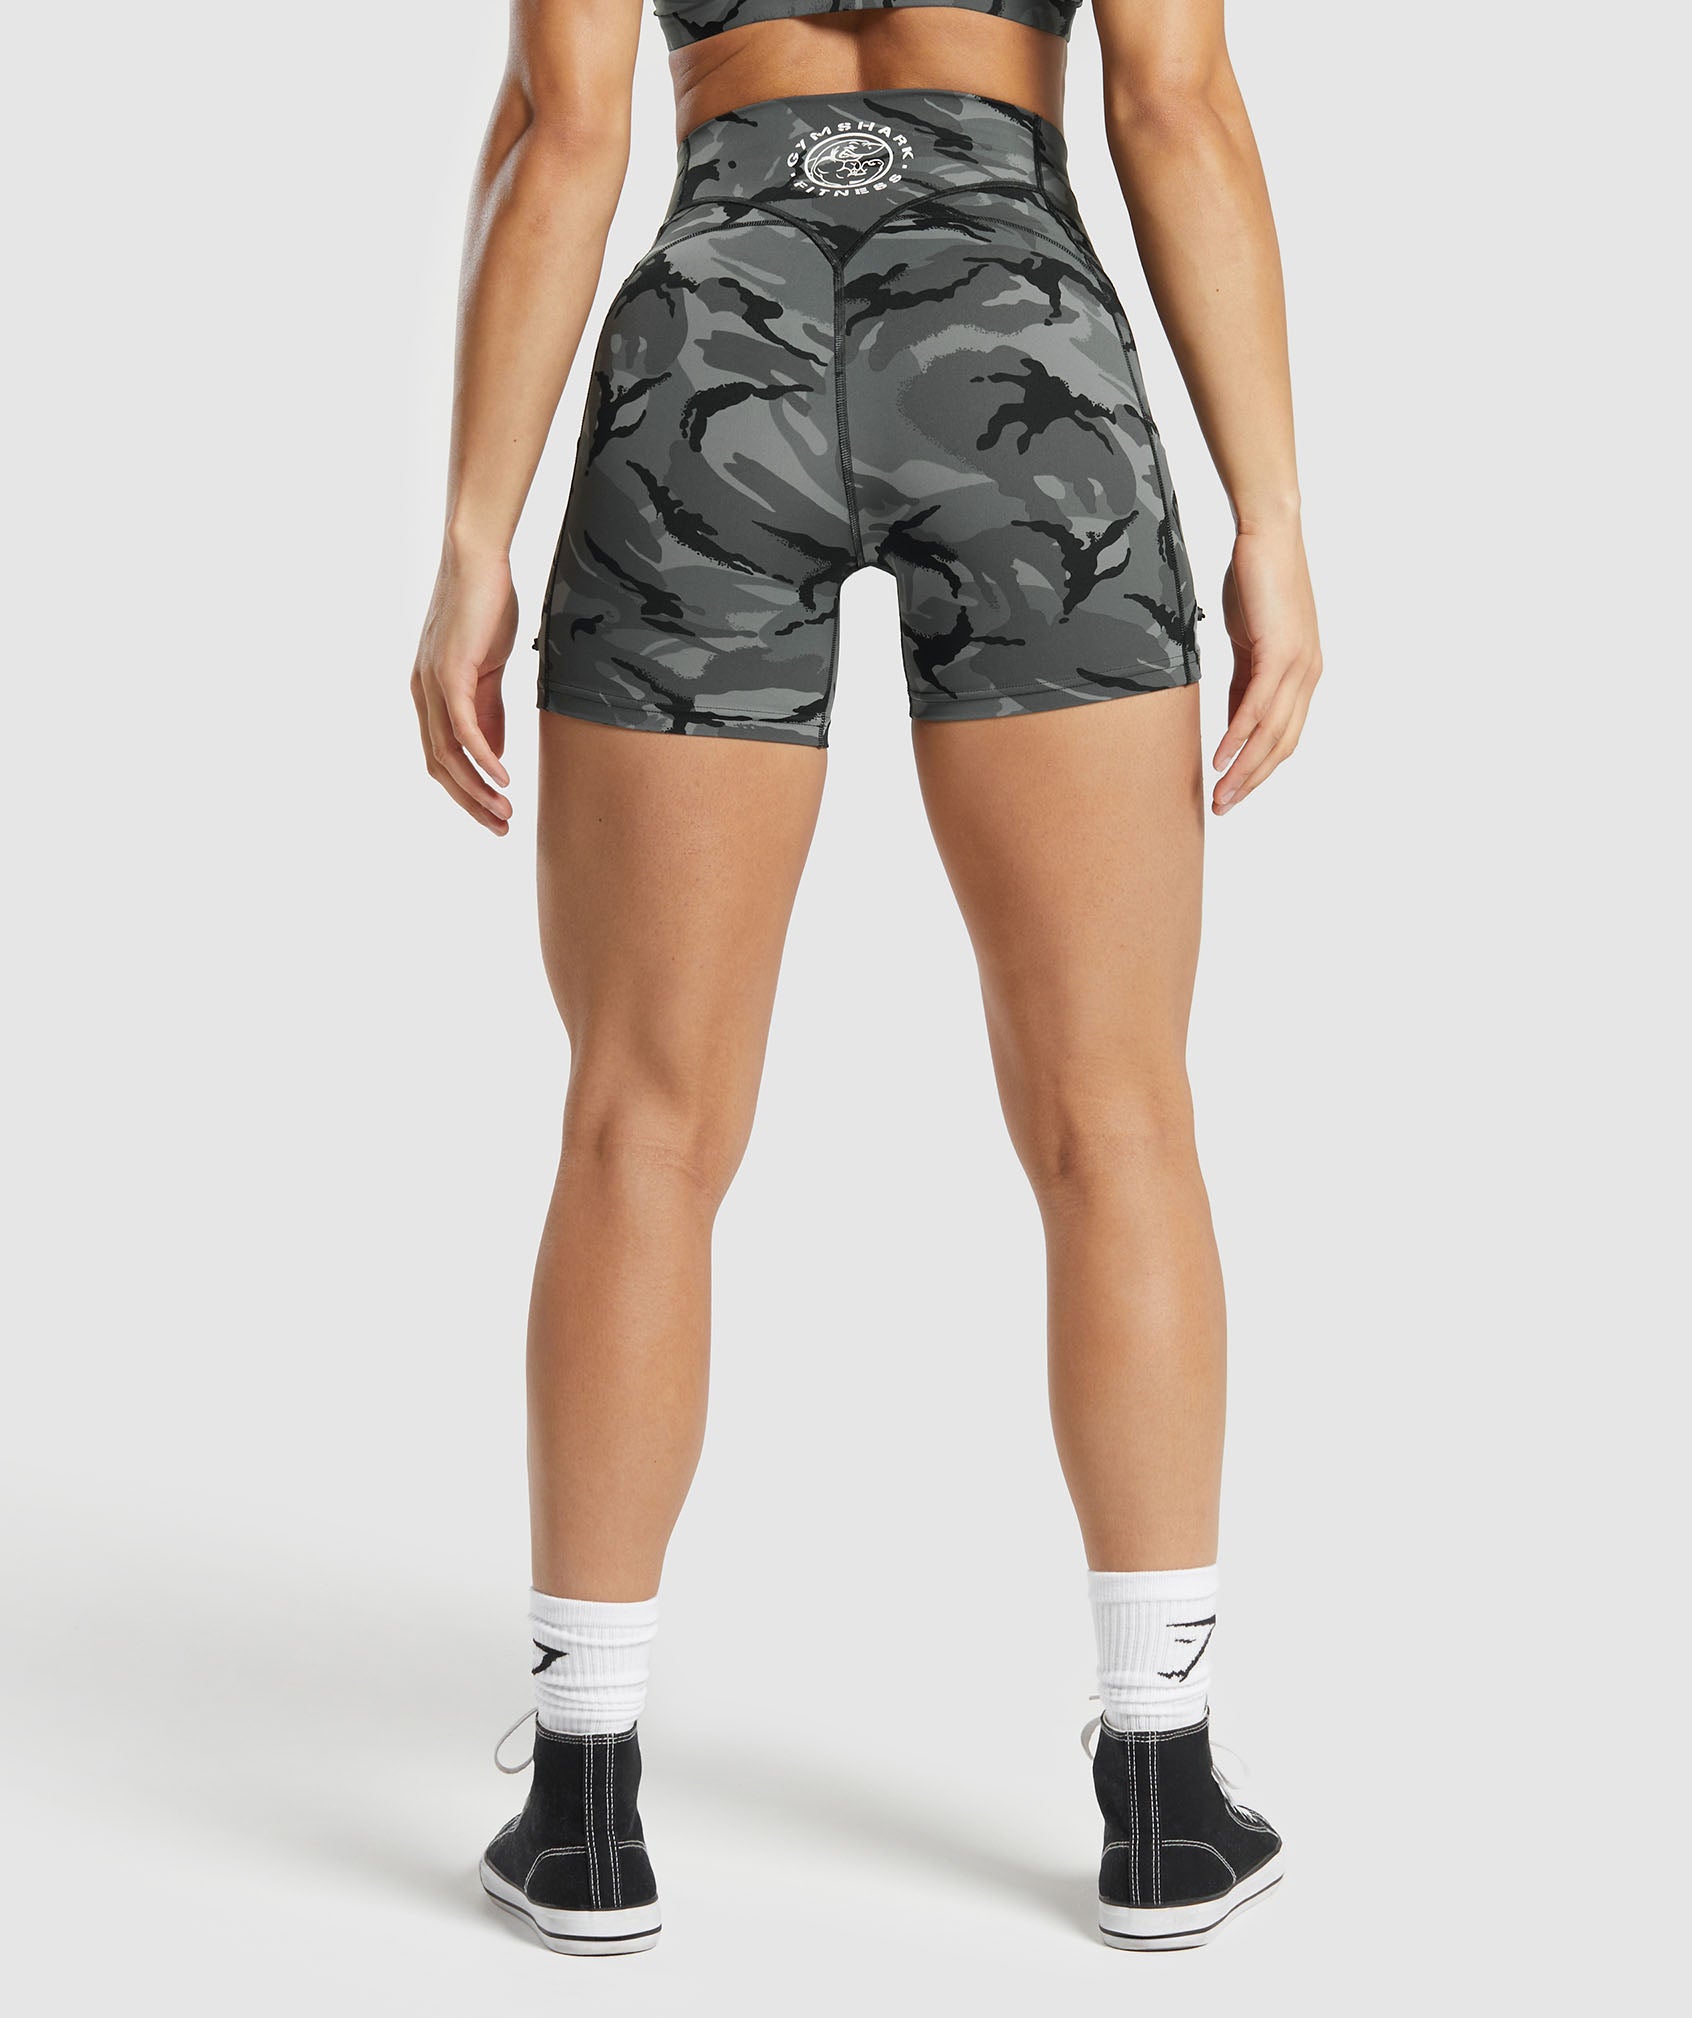 Women's gymshark power loose camo shorts black gray - Depop